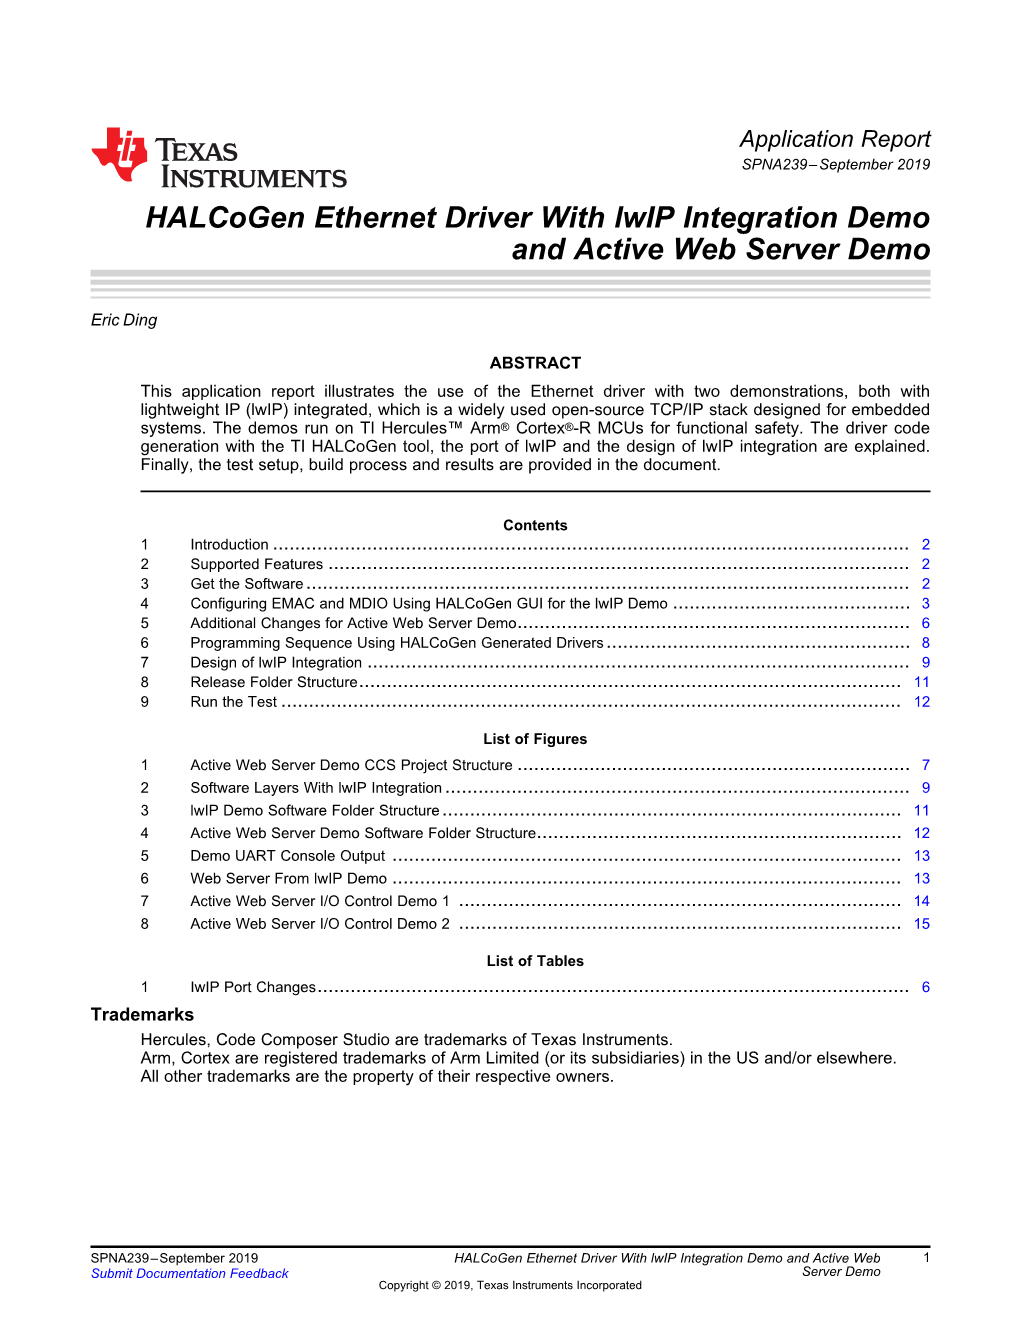 Halcogen Ethernet Driver with Lwip Integration Demo and Active Web Server Demo